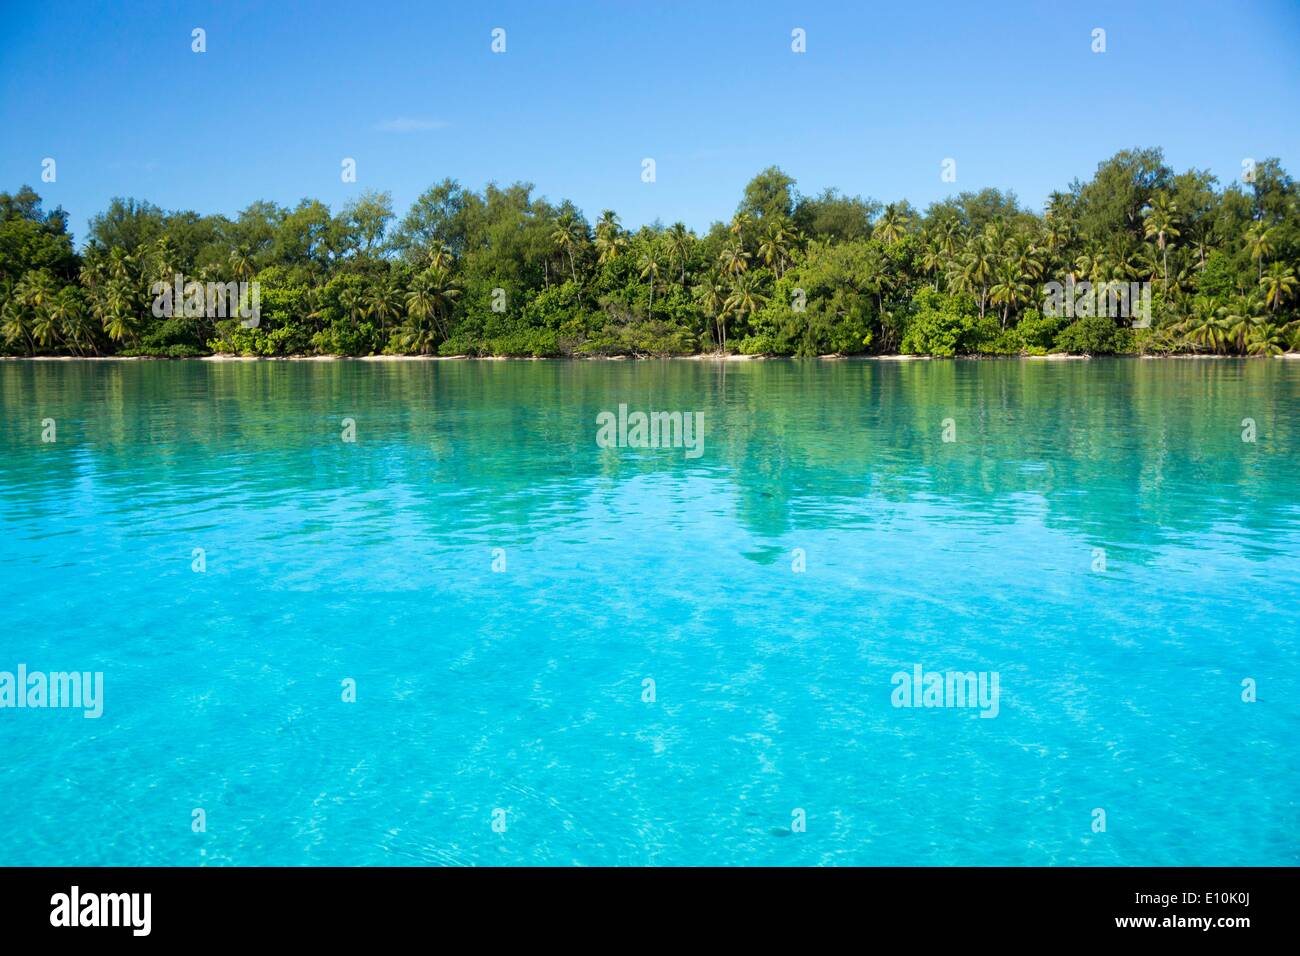 Islas Palau, Palau, Micronesia - abril de 2014 Foto de stock